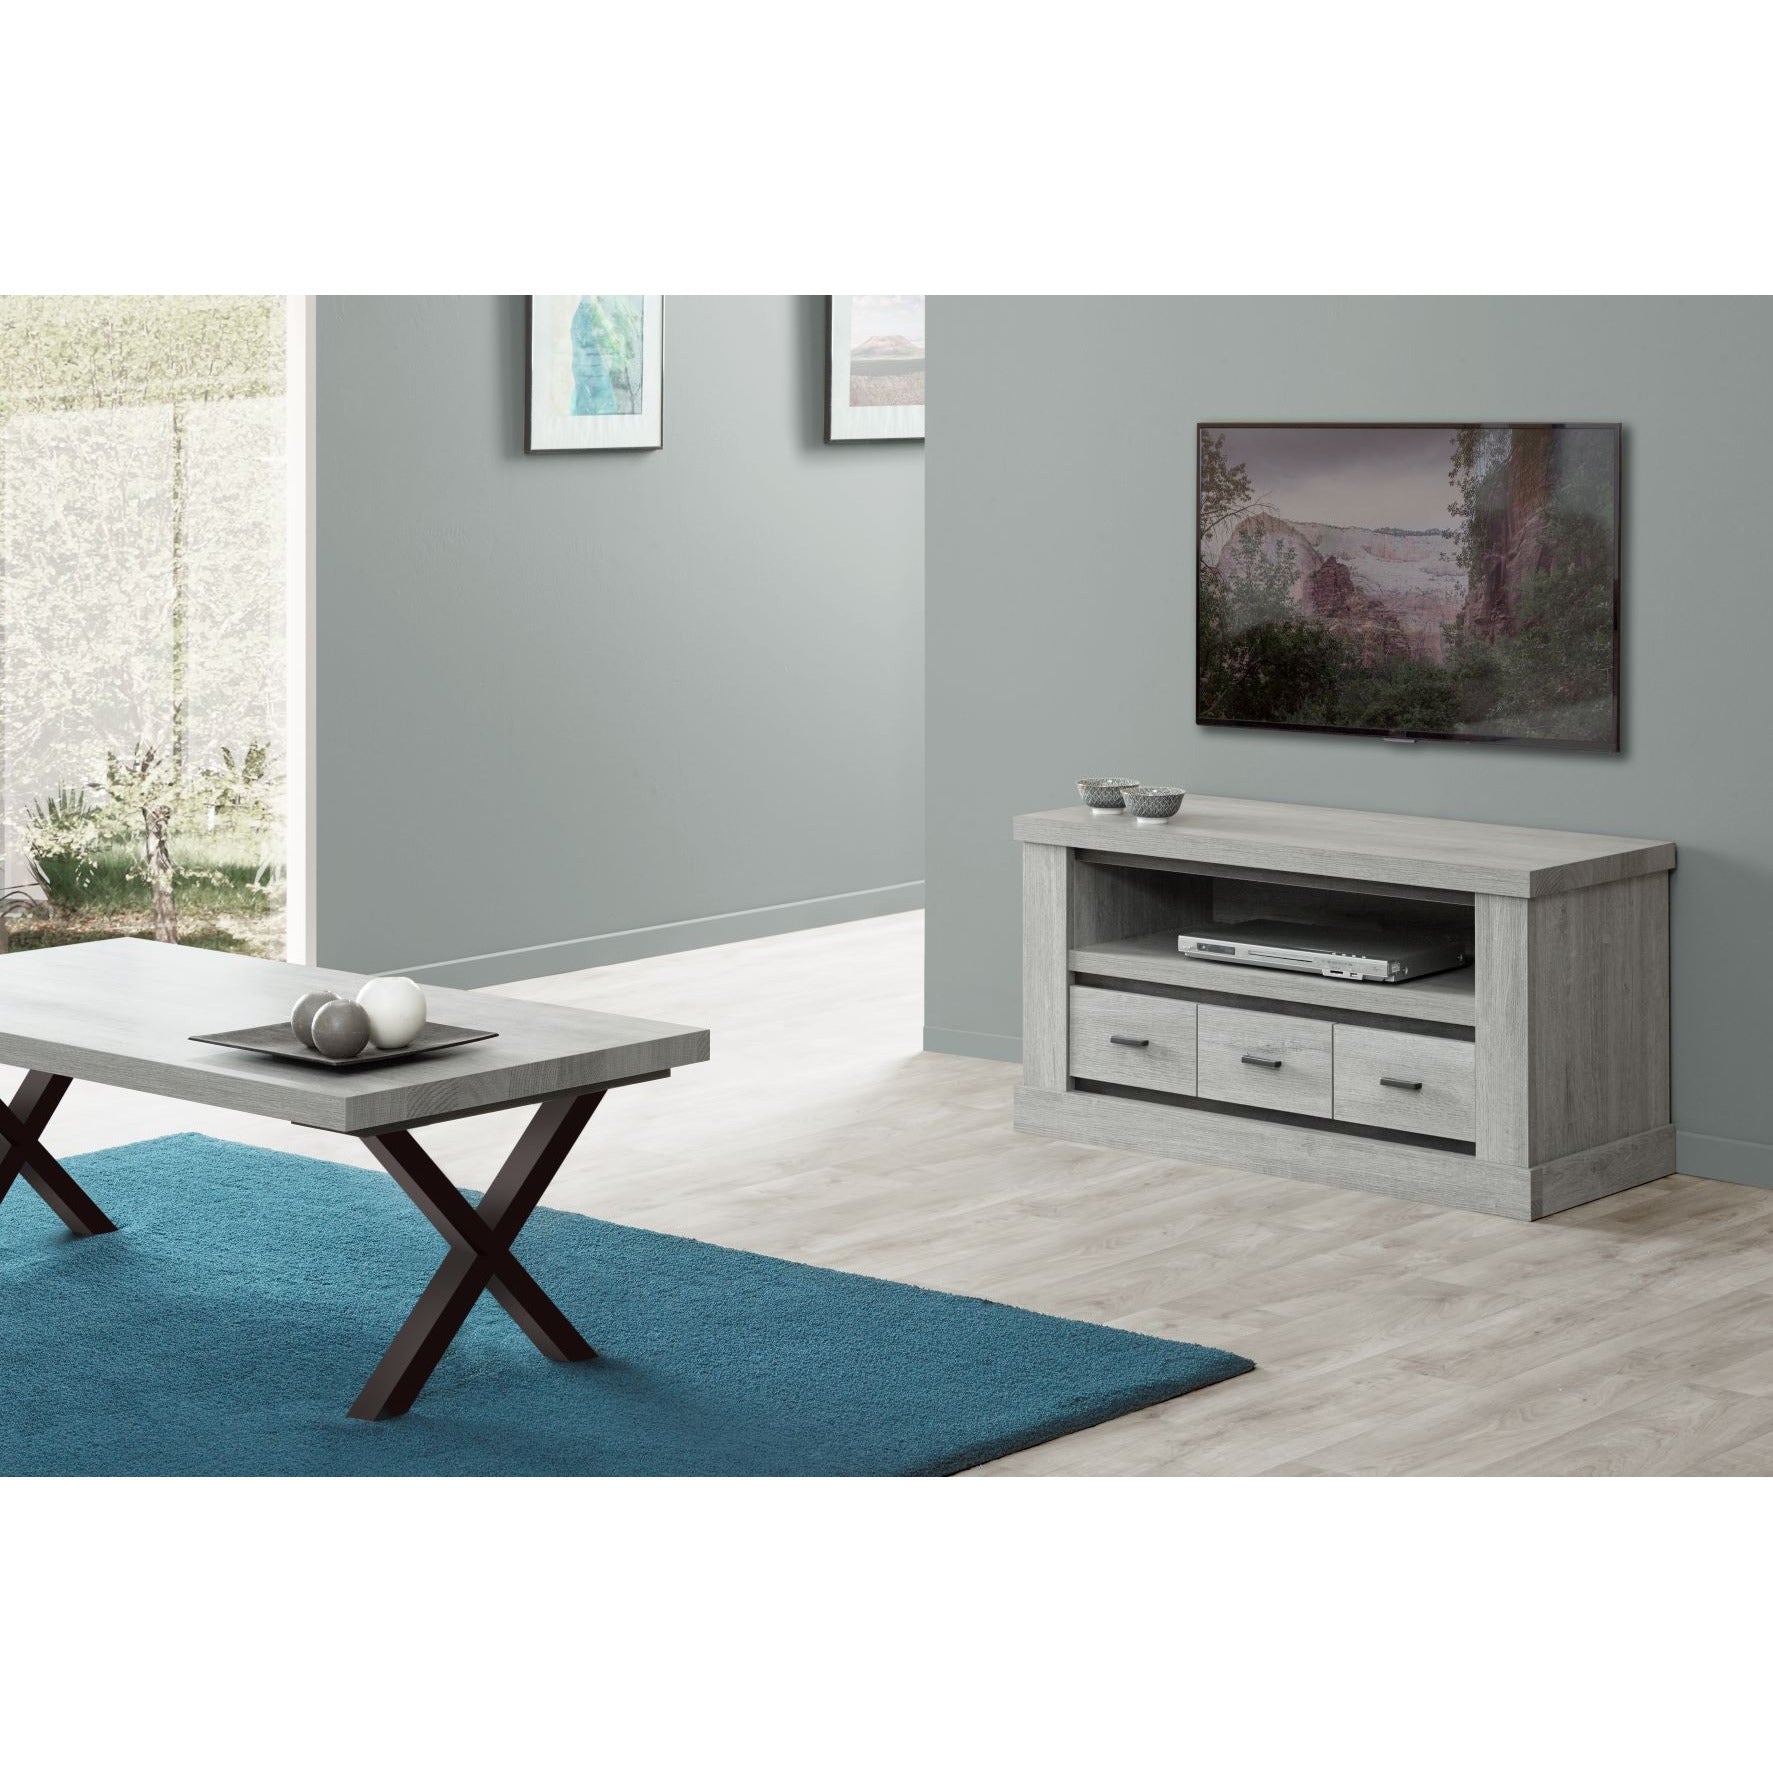 TV cabinet | Furniture series Coupé | natural, gray, black